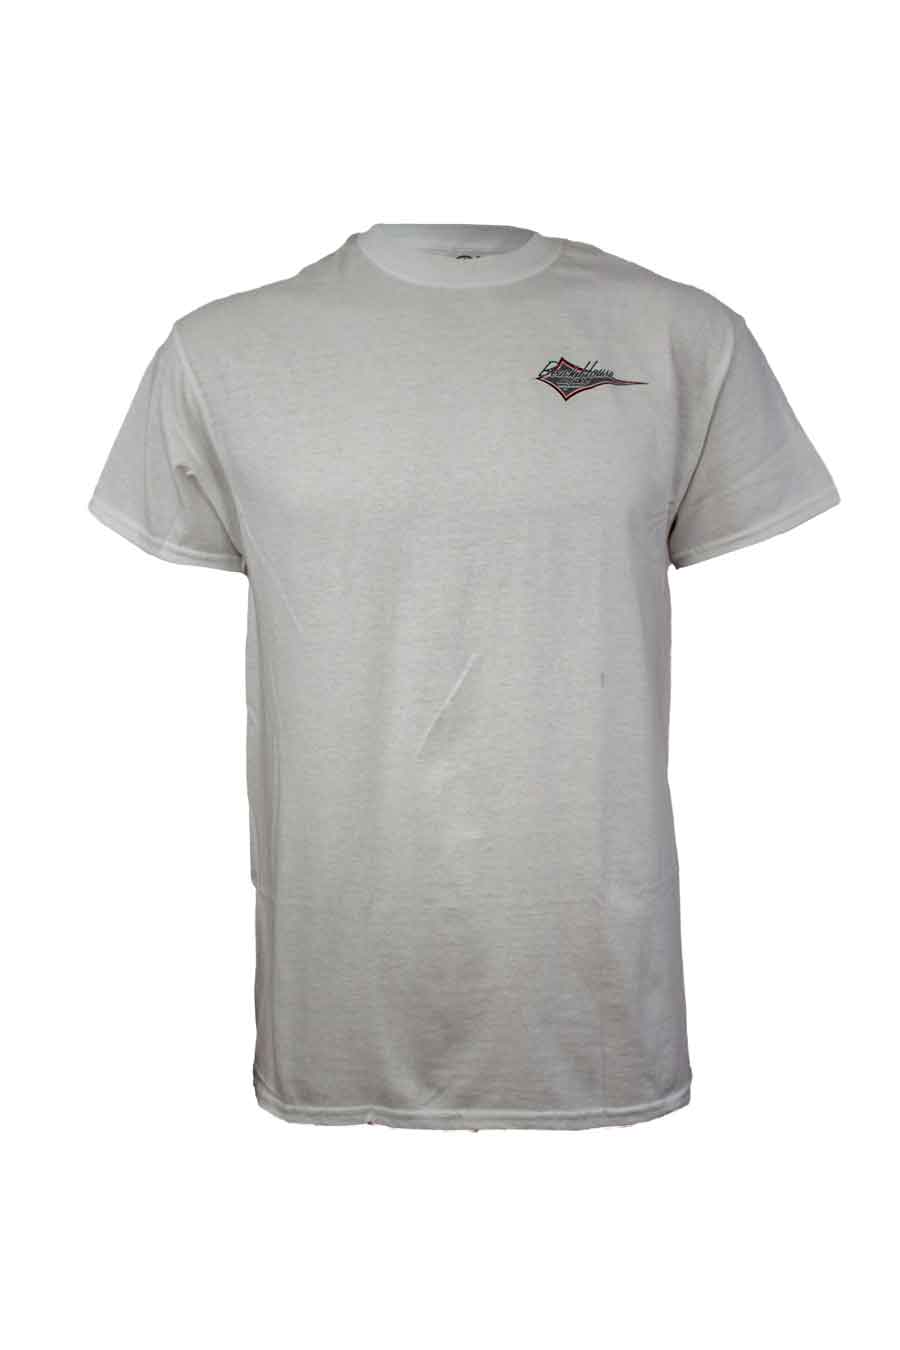 Beach House Diamond Logo Sleeve T-Shirt – Surf N' Wear Beach House Online